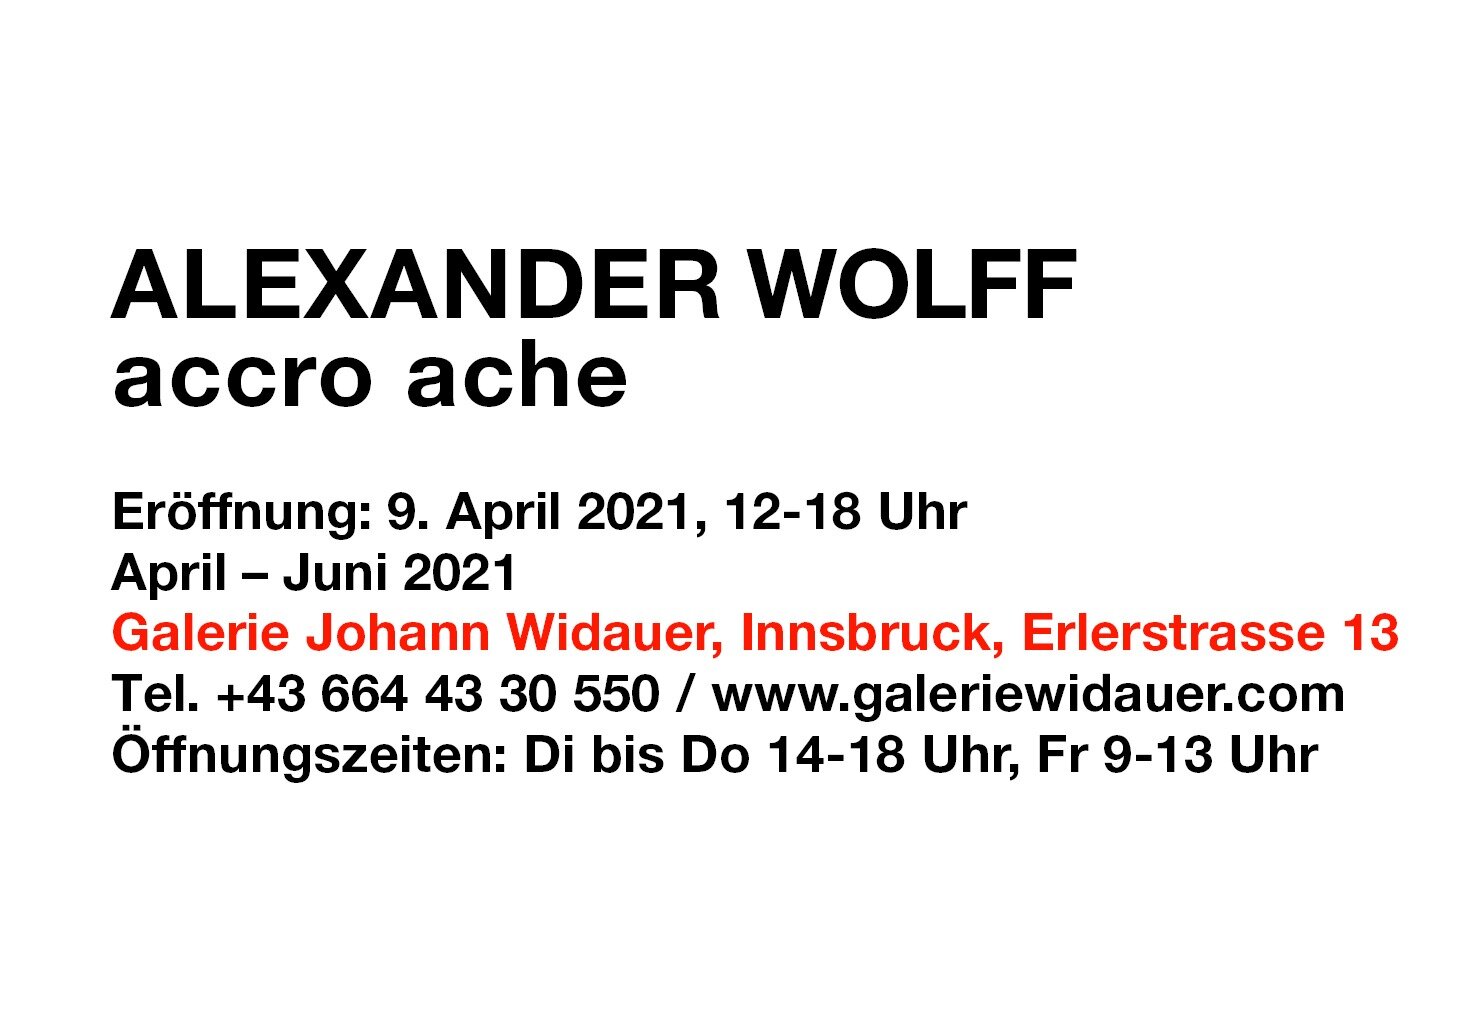 Galerie-Johann-Widauer-Alexander-Wolff-2021-accro-ache.jpg